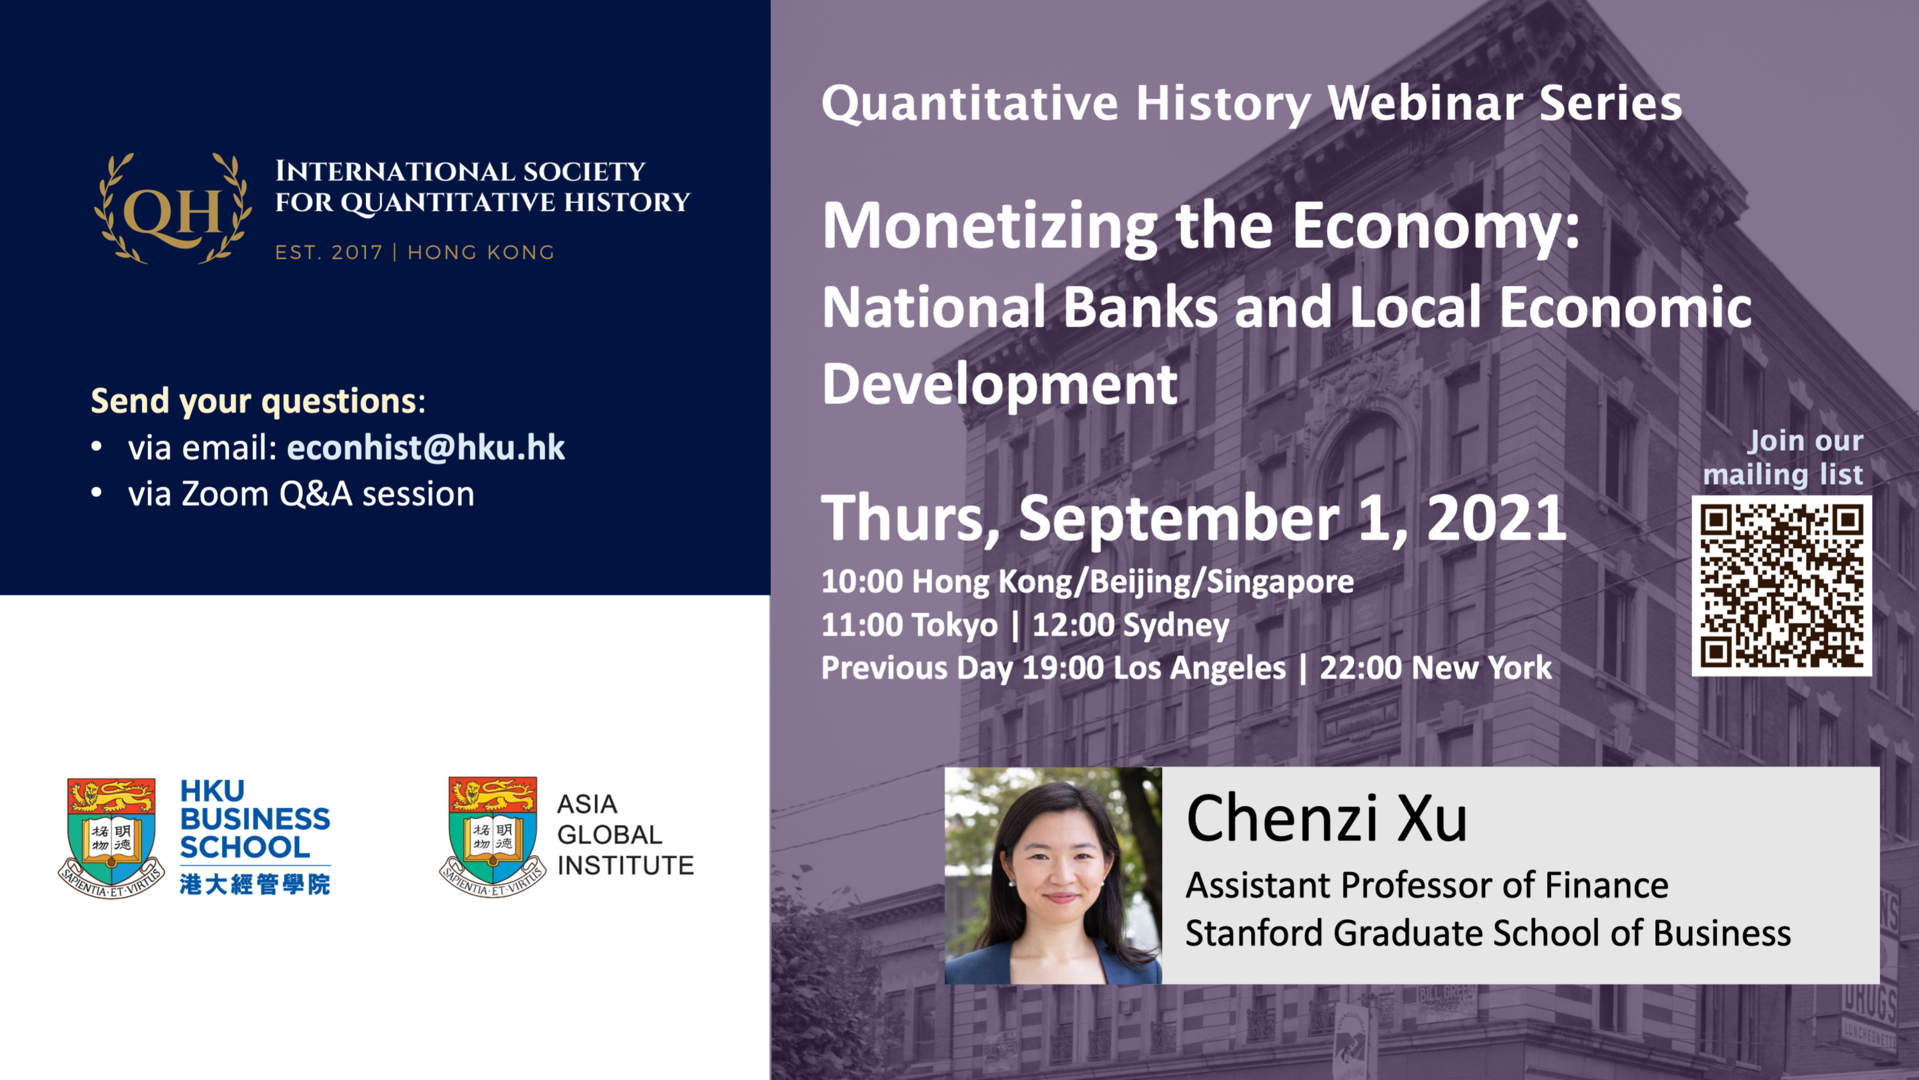 Quantitative History Webinar on Monetizing the Economy: National Banks and Local Economic Development by Chenzi Xu (Stanford GSB)